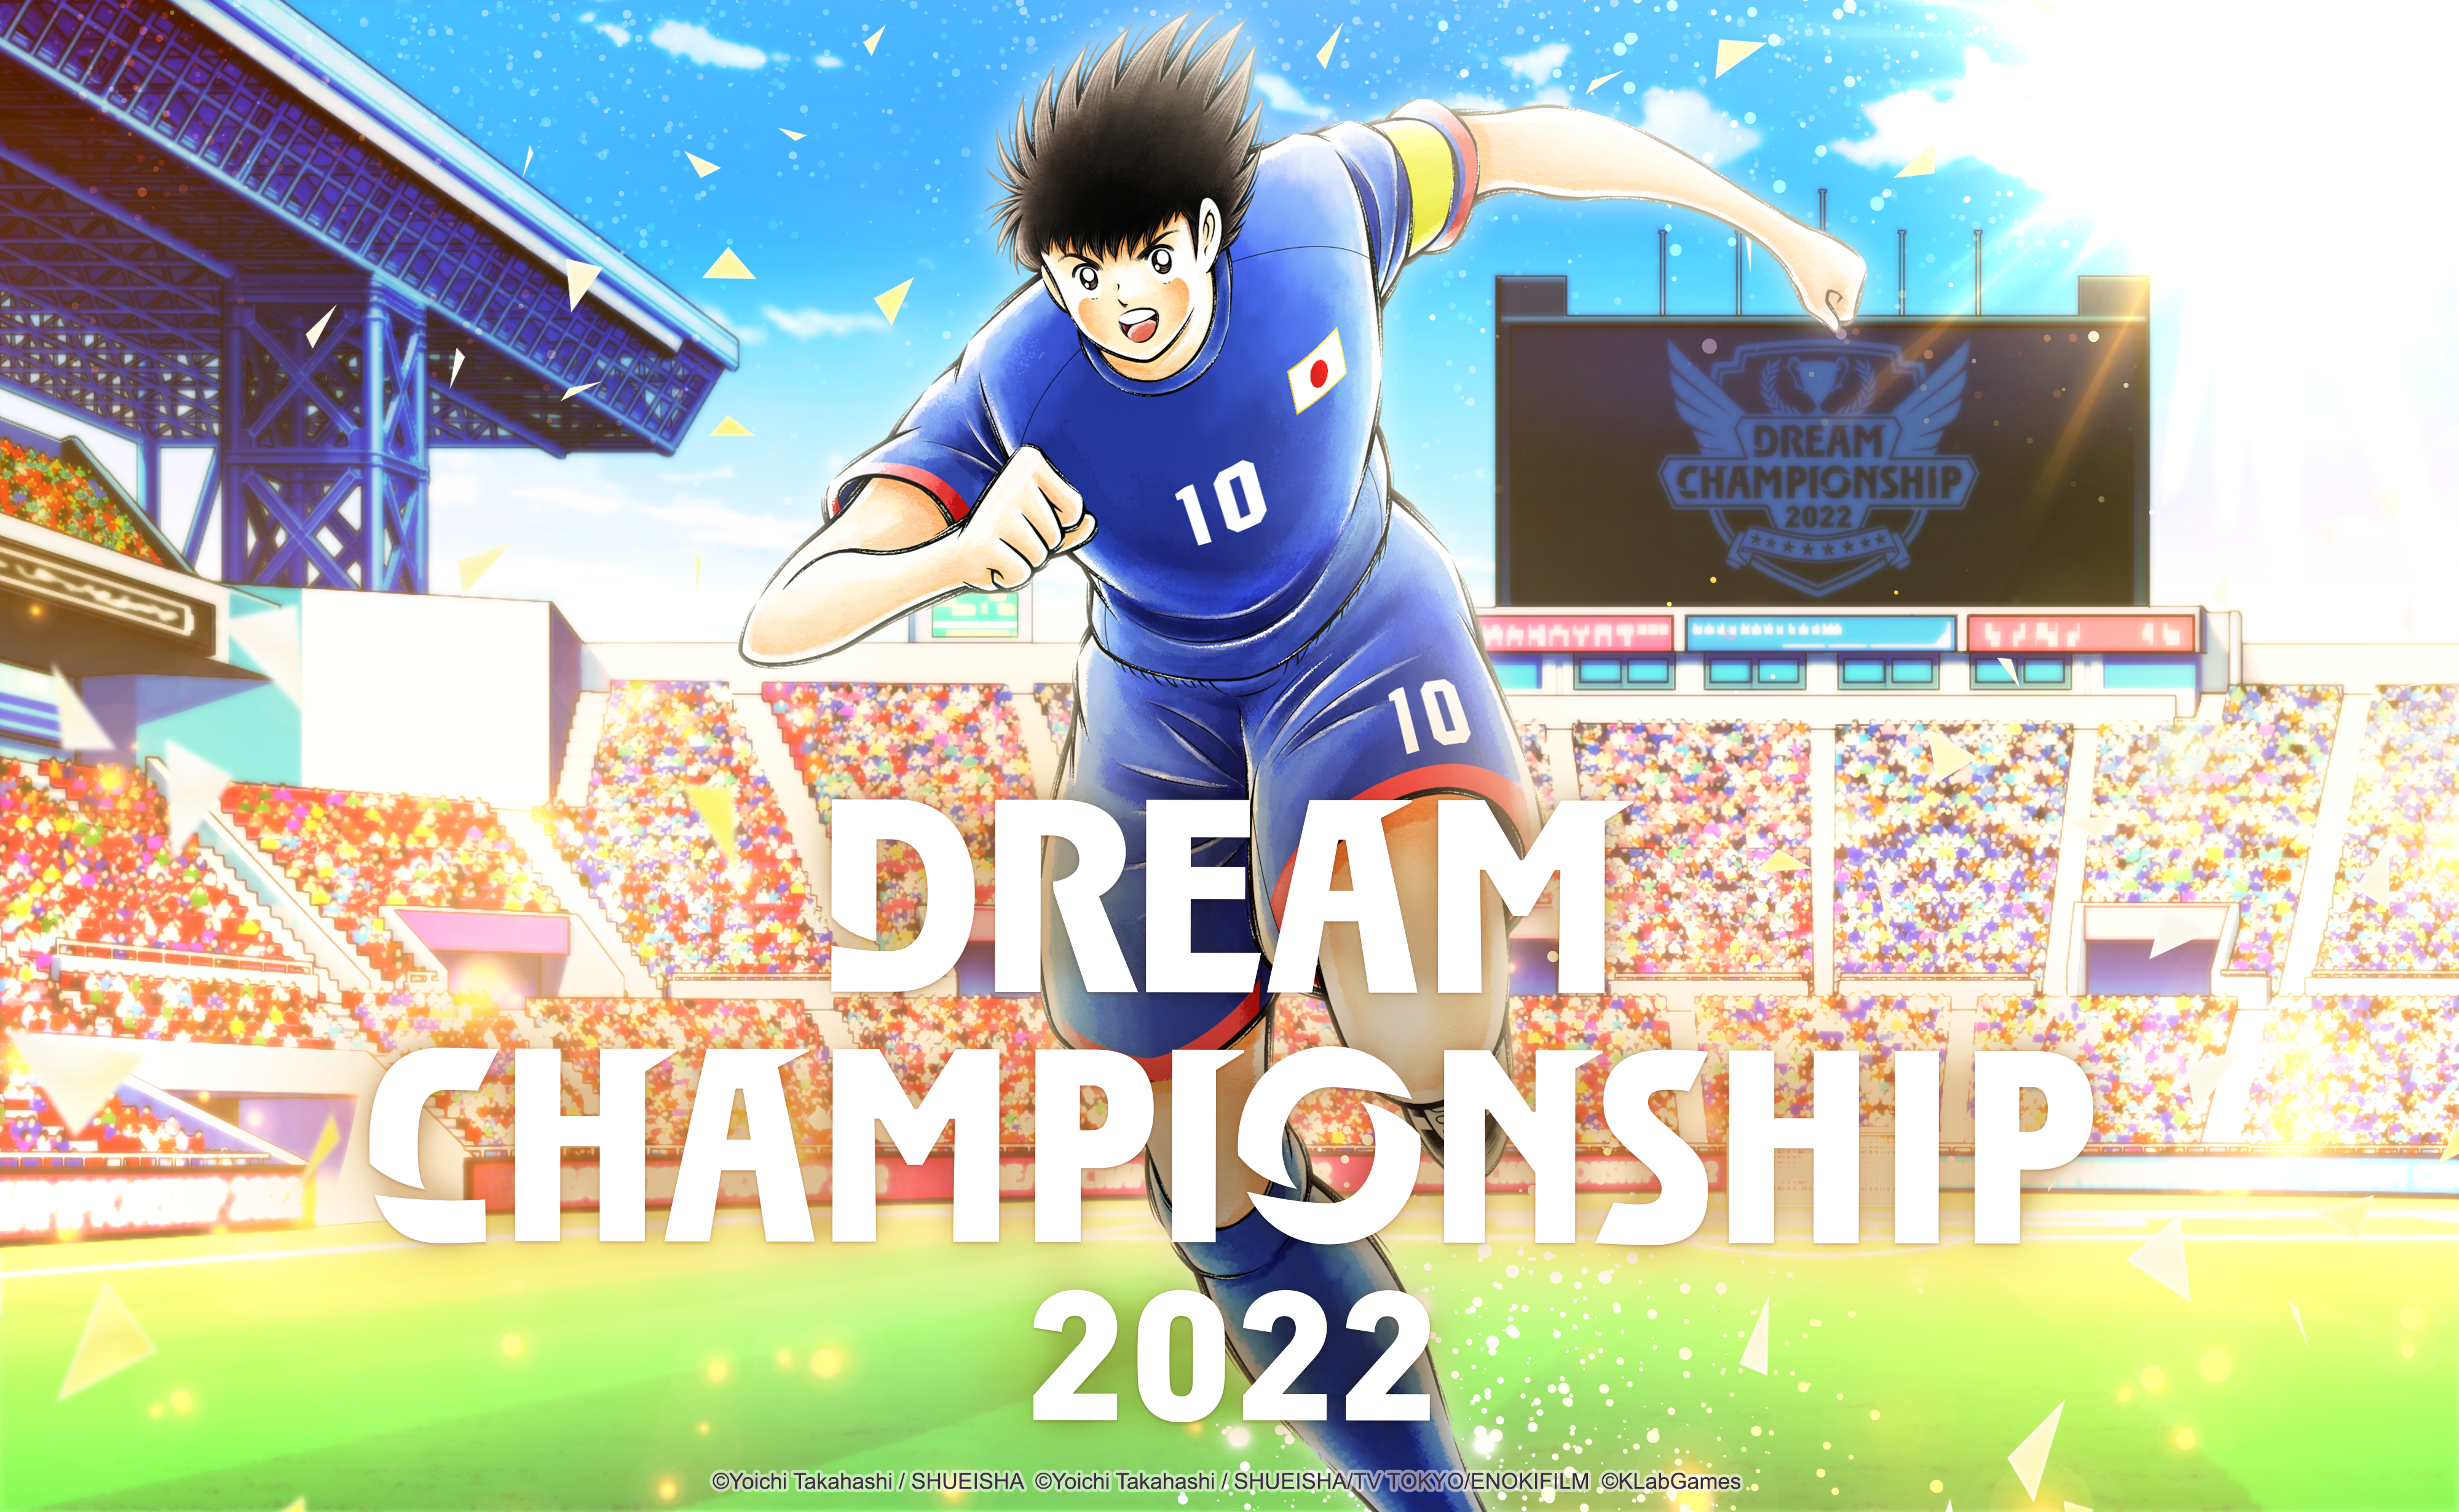 Captain Tsubasa: Dream Team Official Site